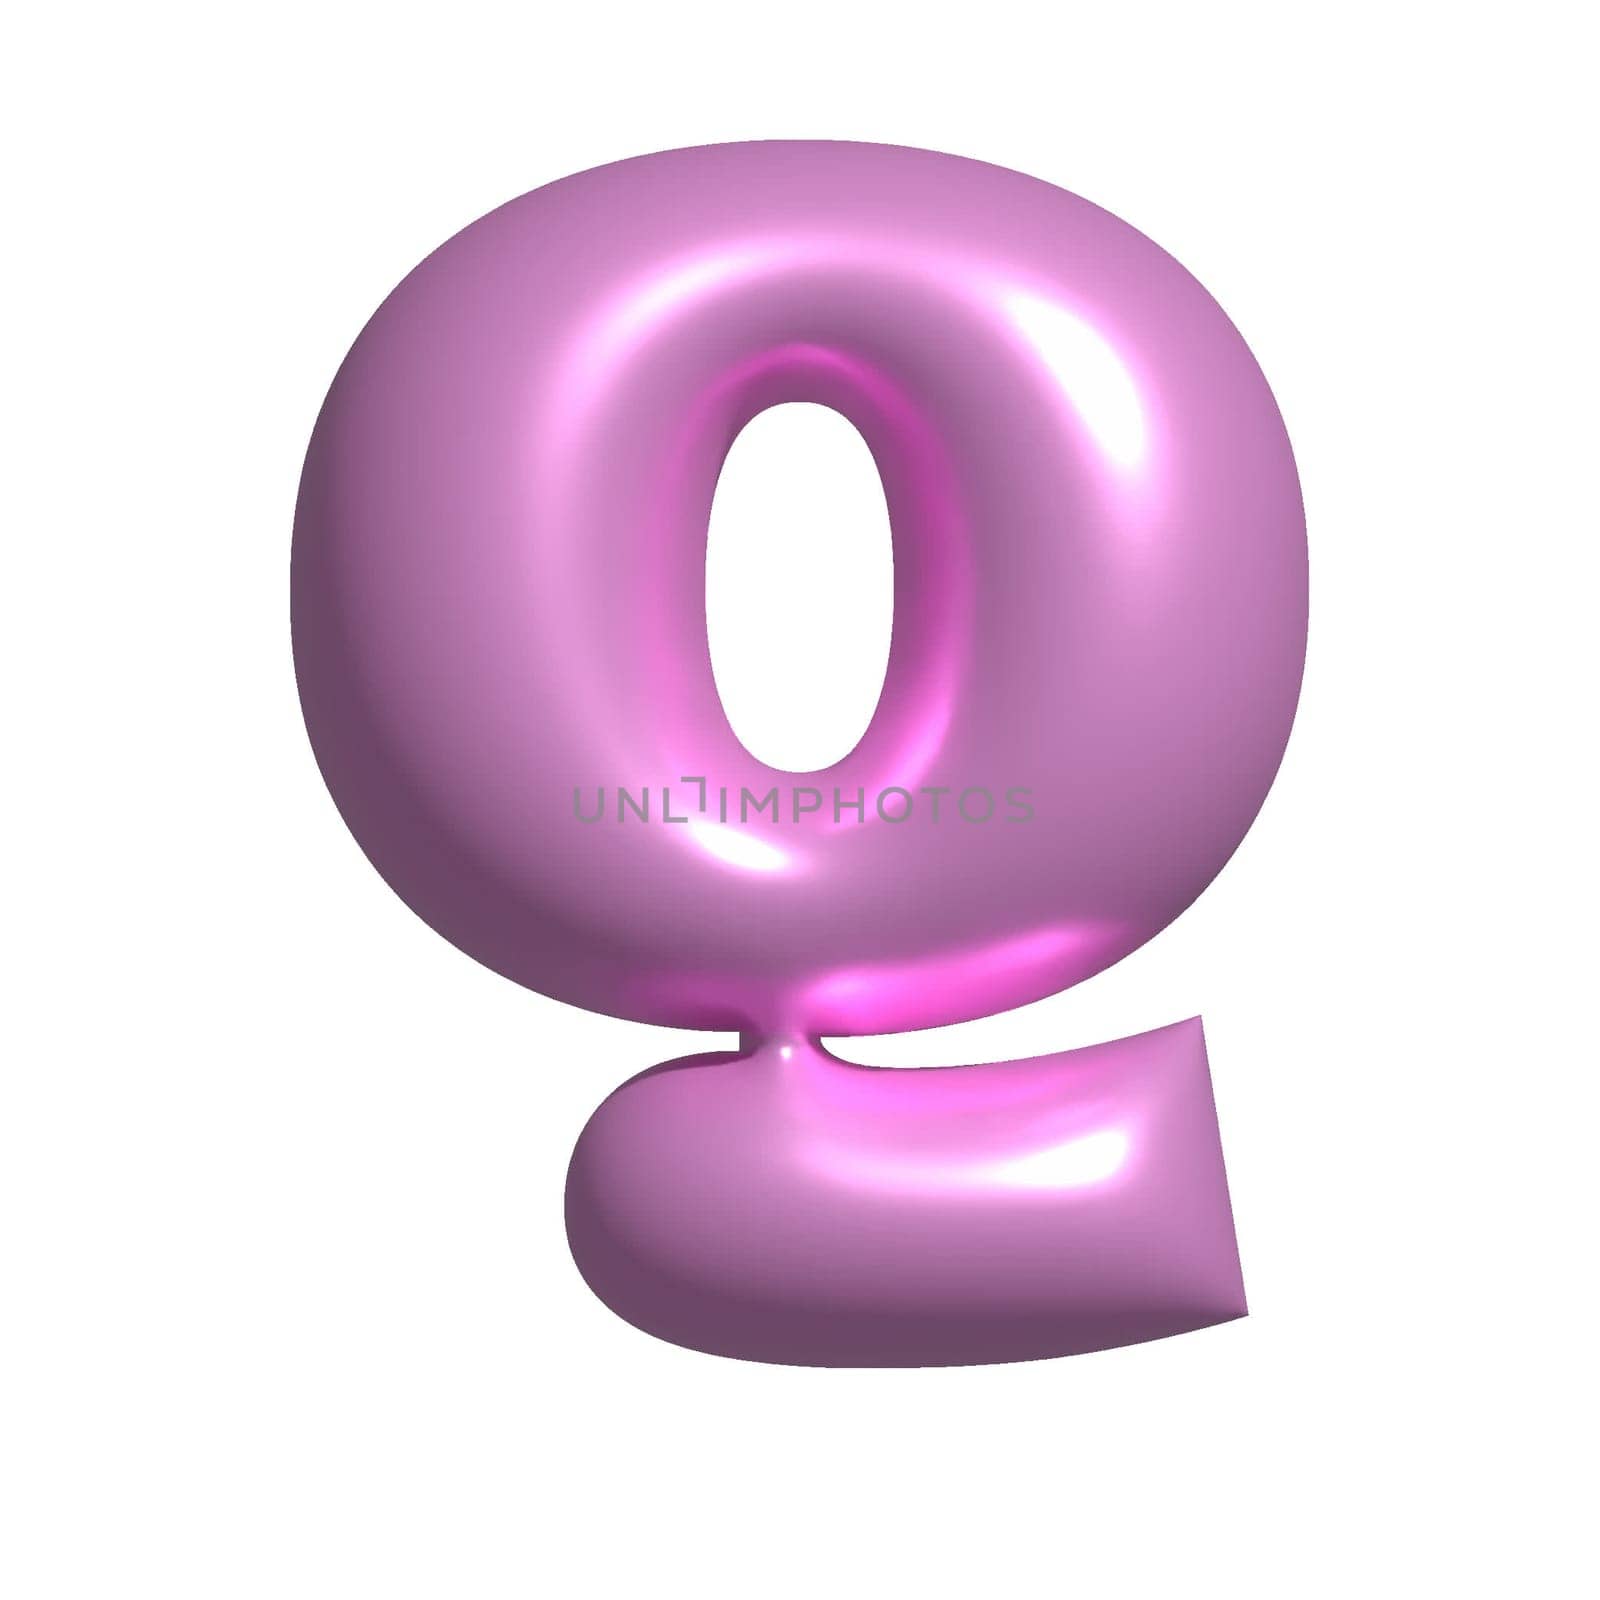 Pink metal shiny reflective letter Q 3D illustration by Dustick